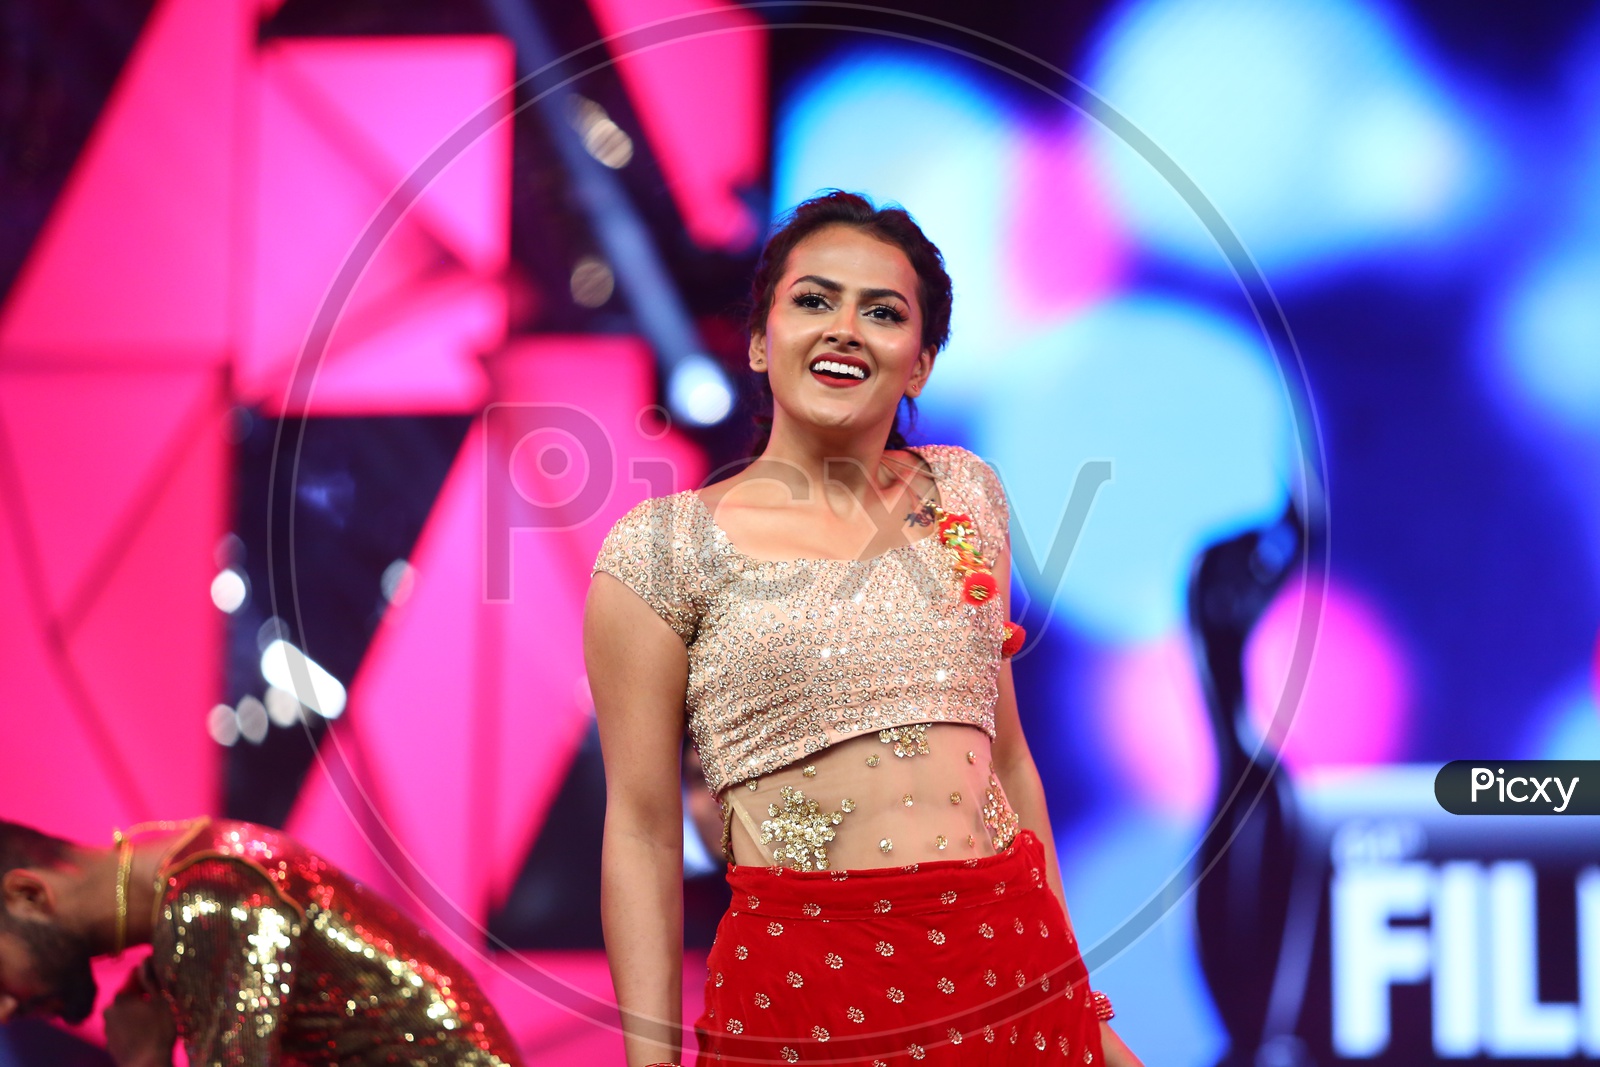 Actress Shradda Srinath dancing on the stage